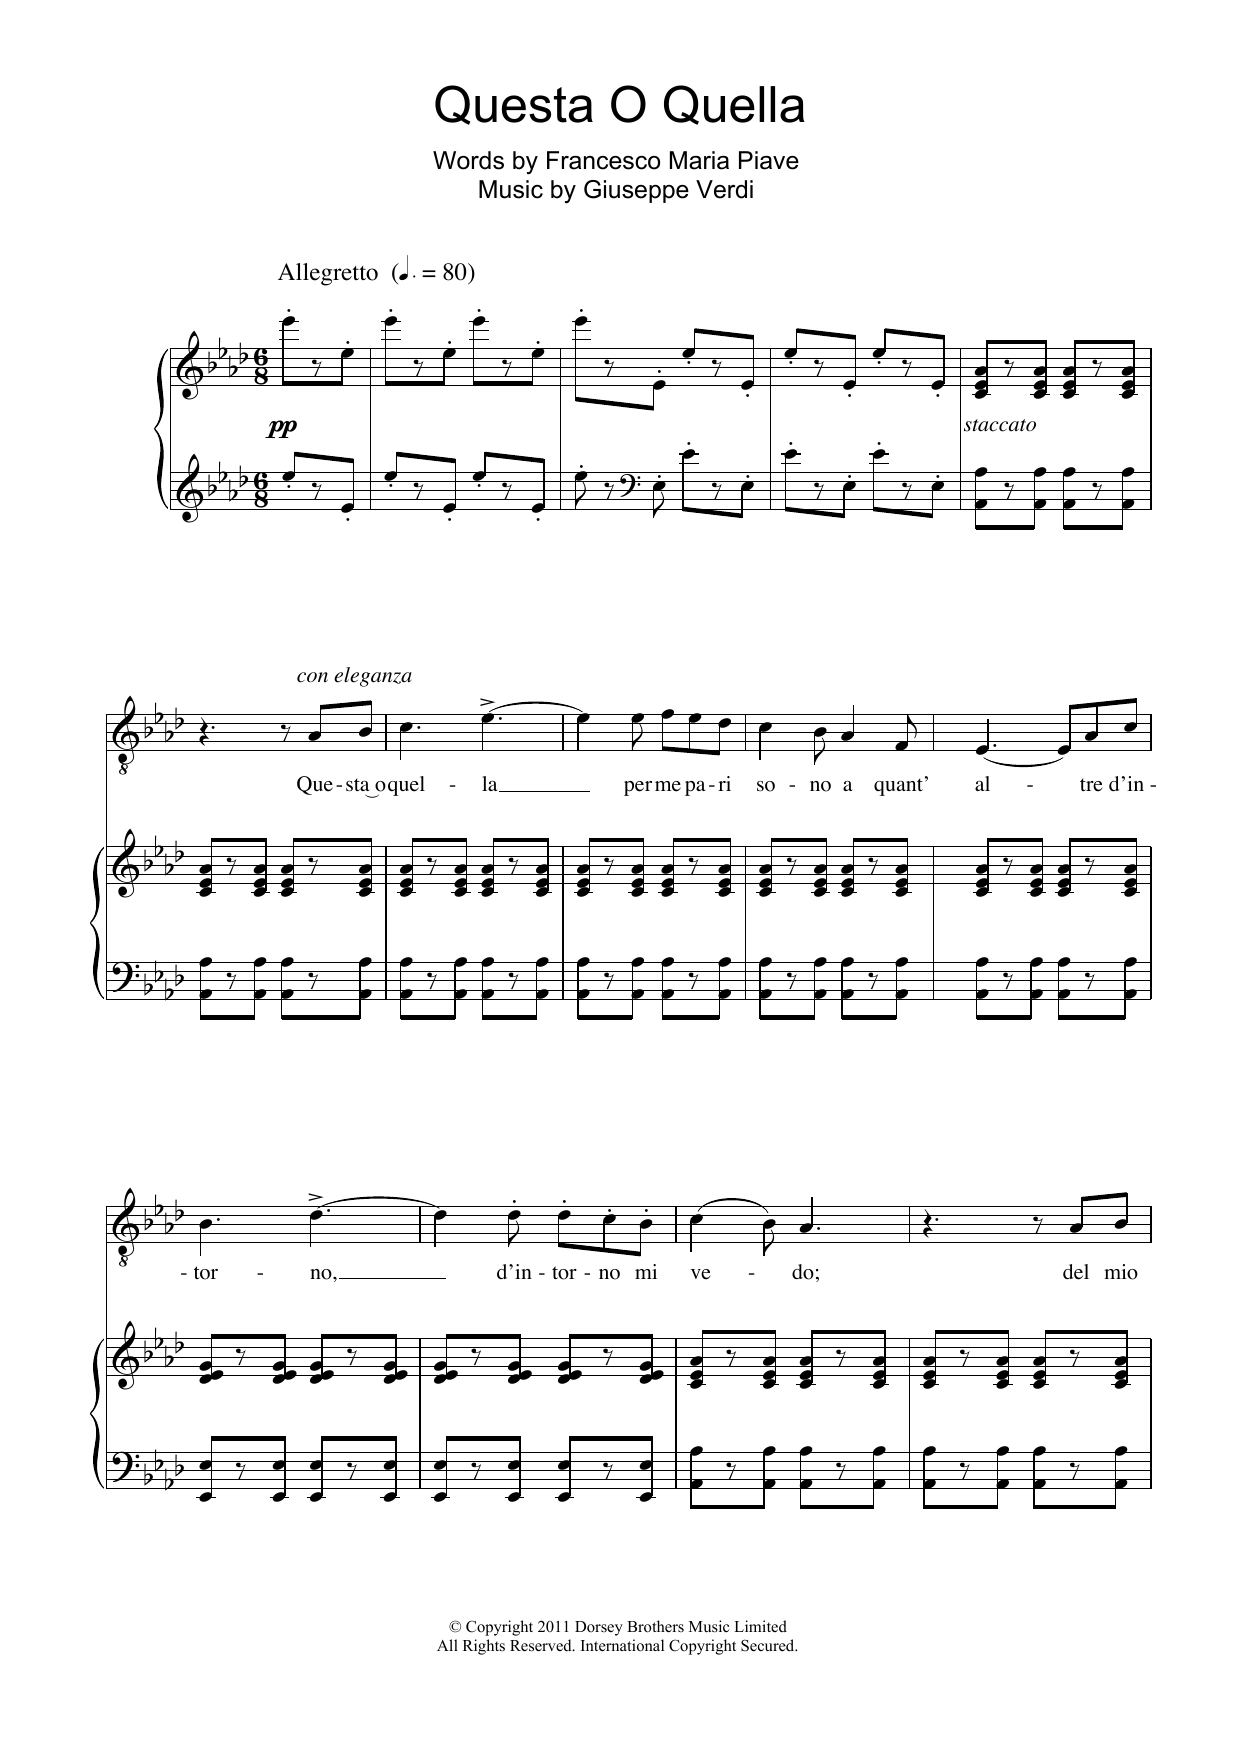 Andrea Bocelli Questa O Quella (from Rigoletto) Sheet Music Notes & Chords for Piano & Vocal - Download or Print PDF